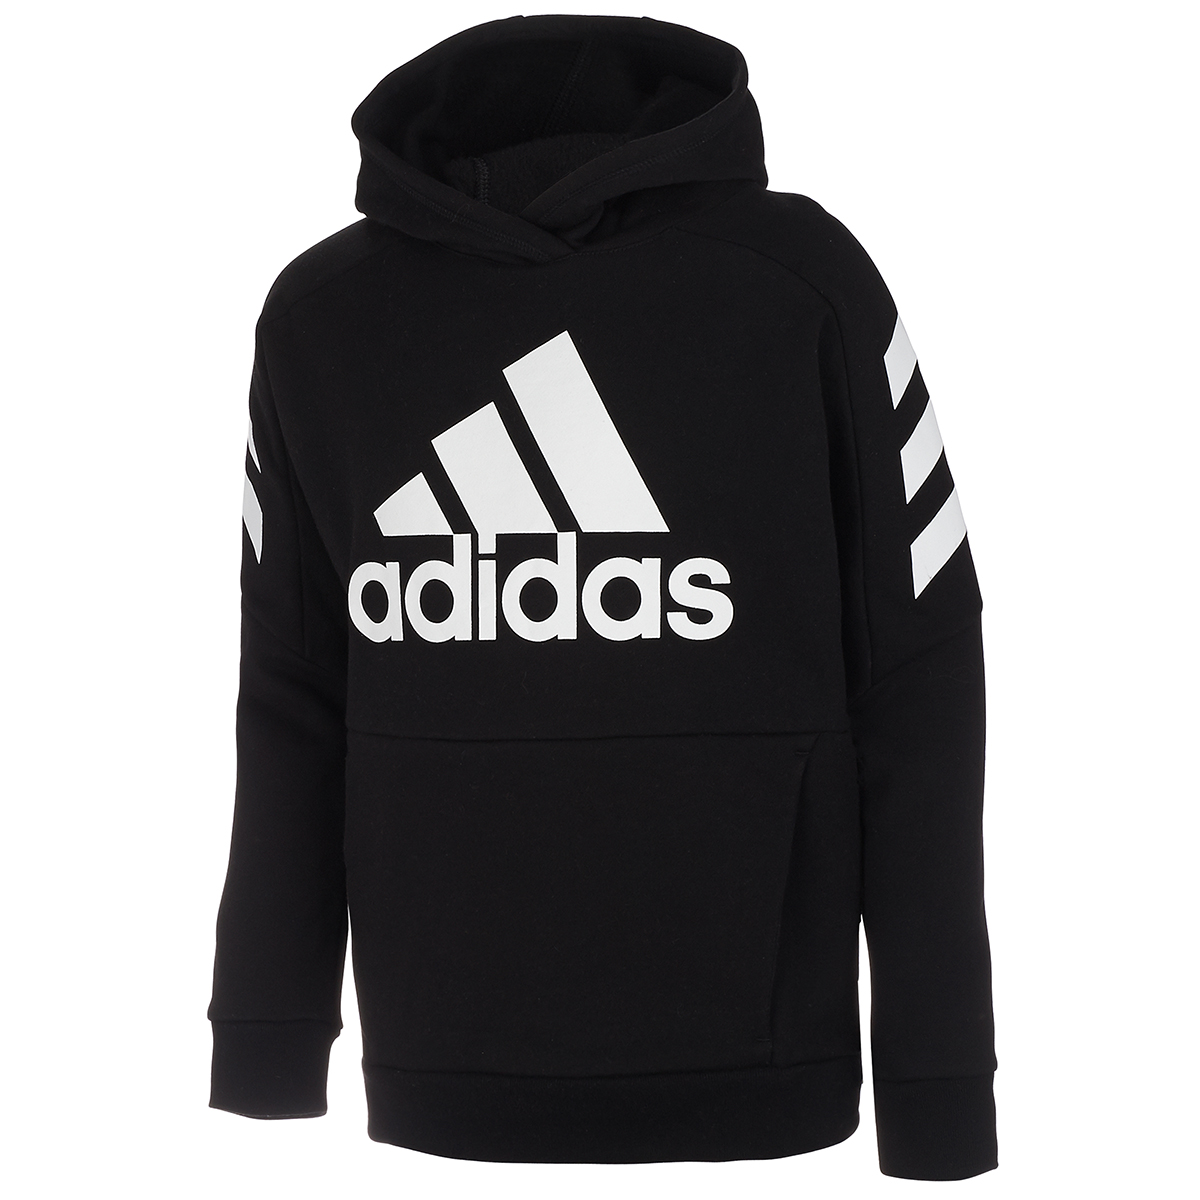 Adidas Boys' 8-20 Block Fleece Pullover Hoodie - Black, XL